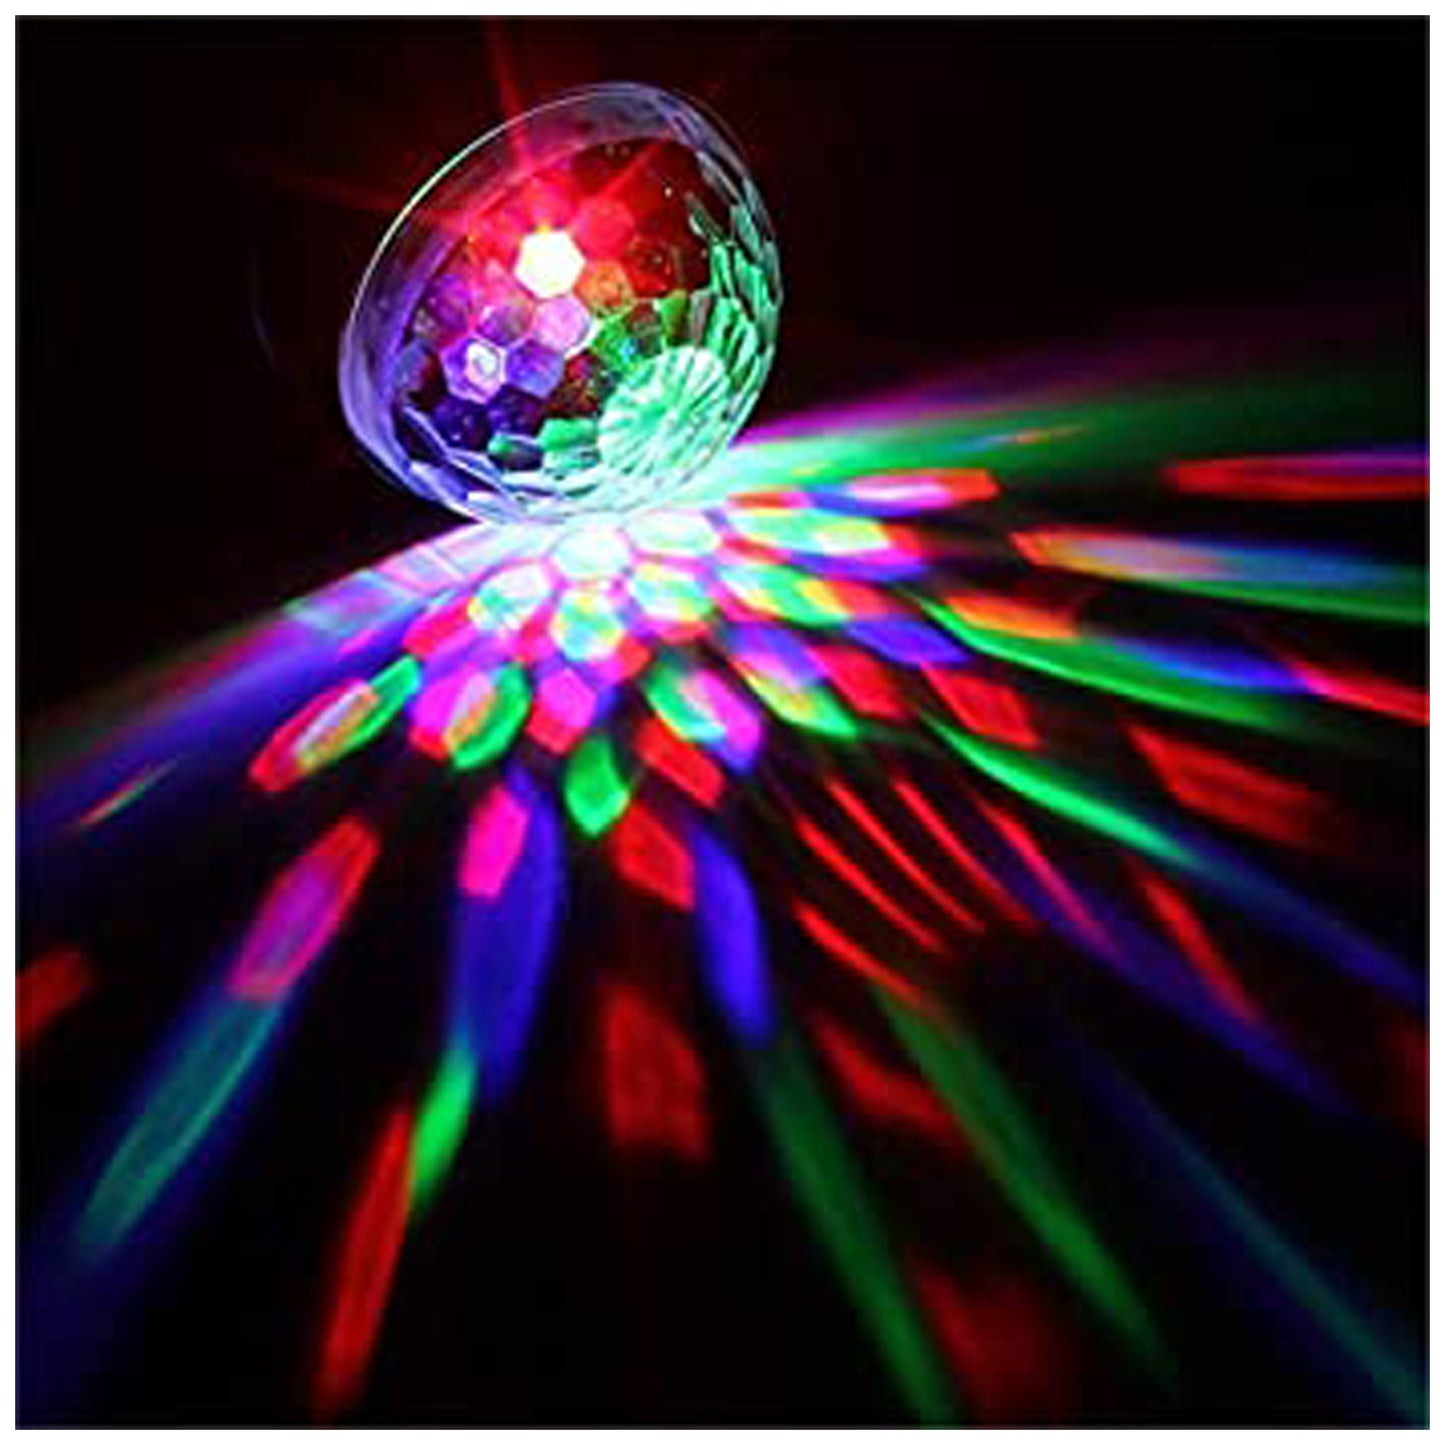 WRADER Disco Light Dj Light for Birthday Party Home Bedroom Hall and Diwali Single Disco Ball